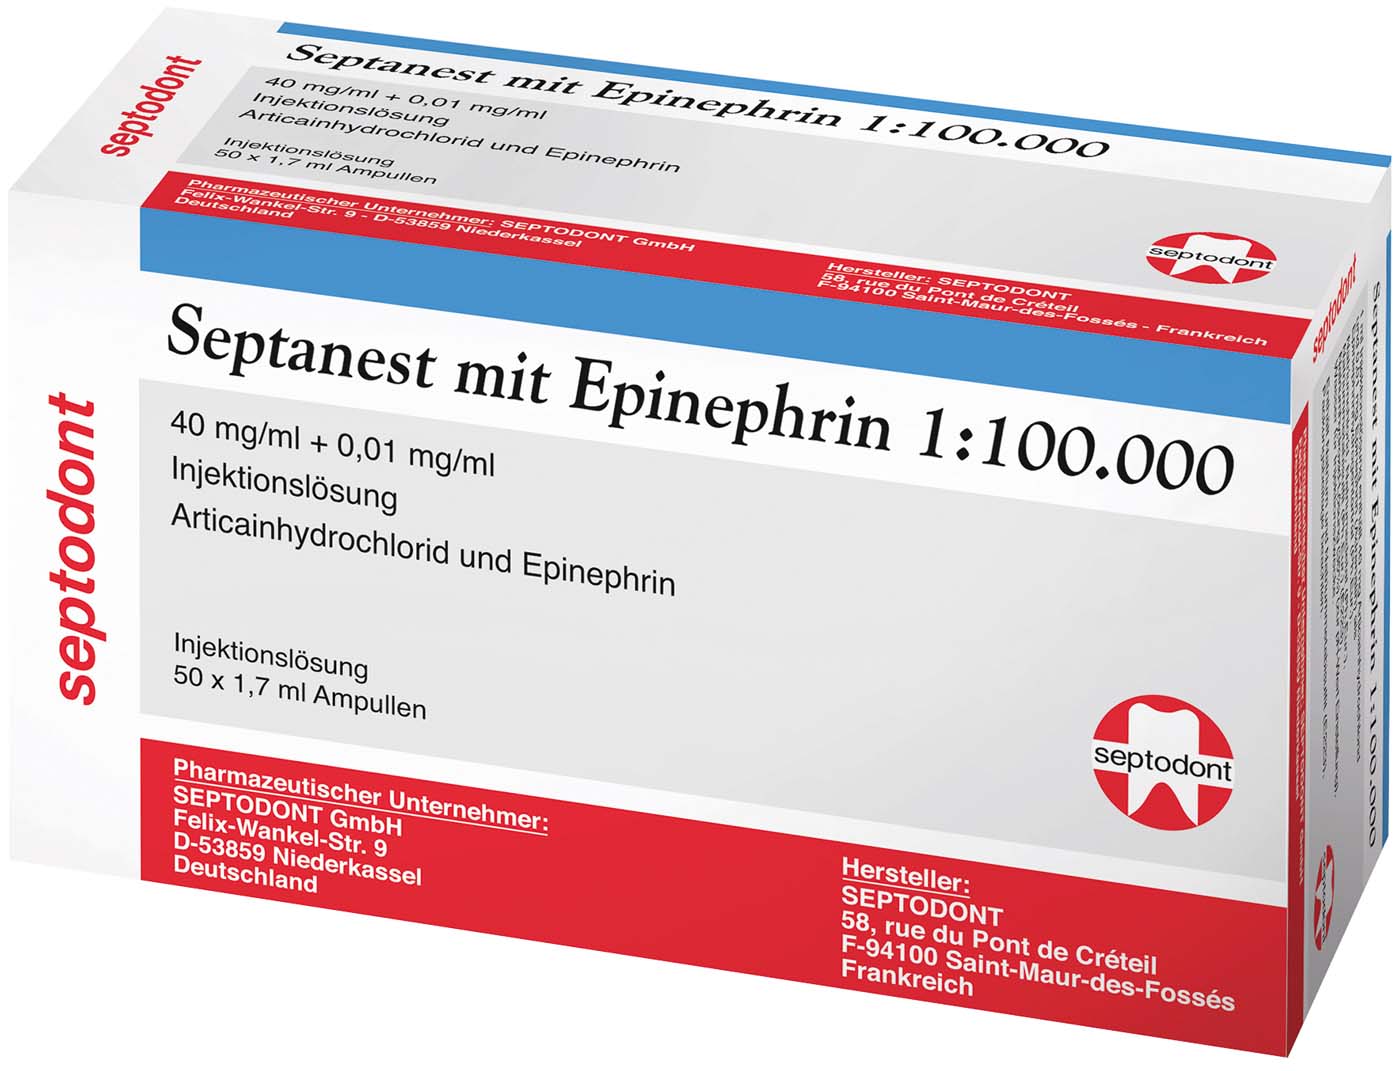 Septanest mit Epinephrin 1:100.000 Septodont